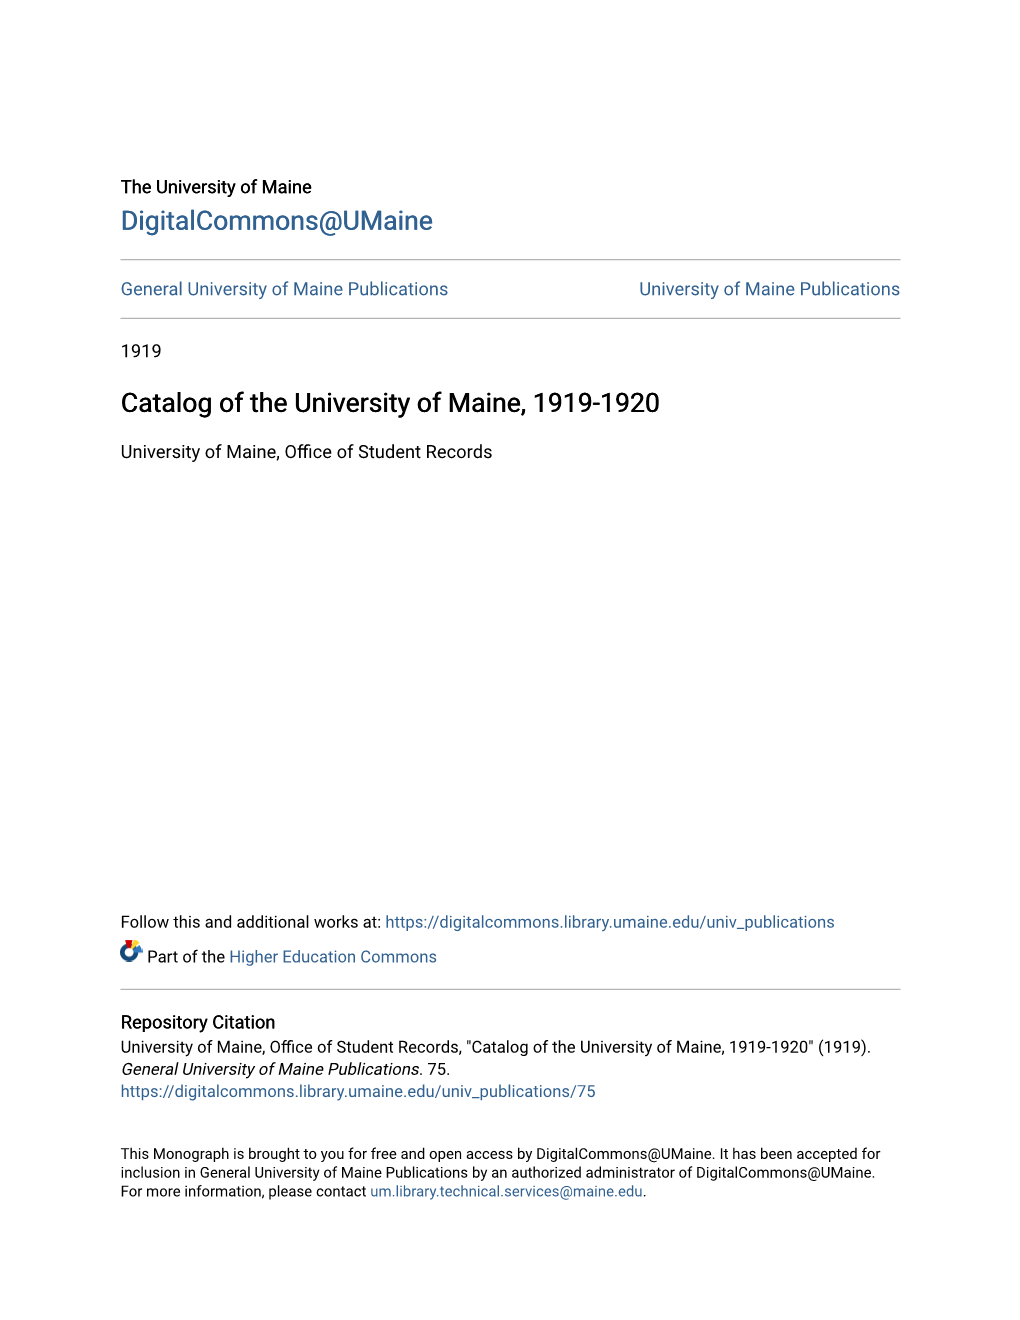 Catalog of the University of Maine, 1919-1920